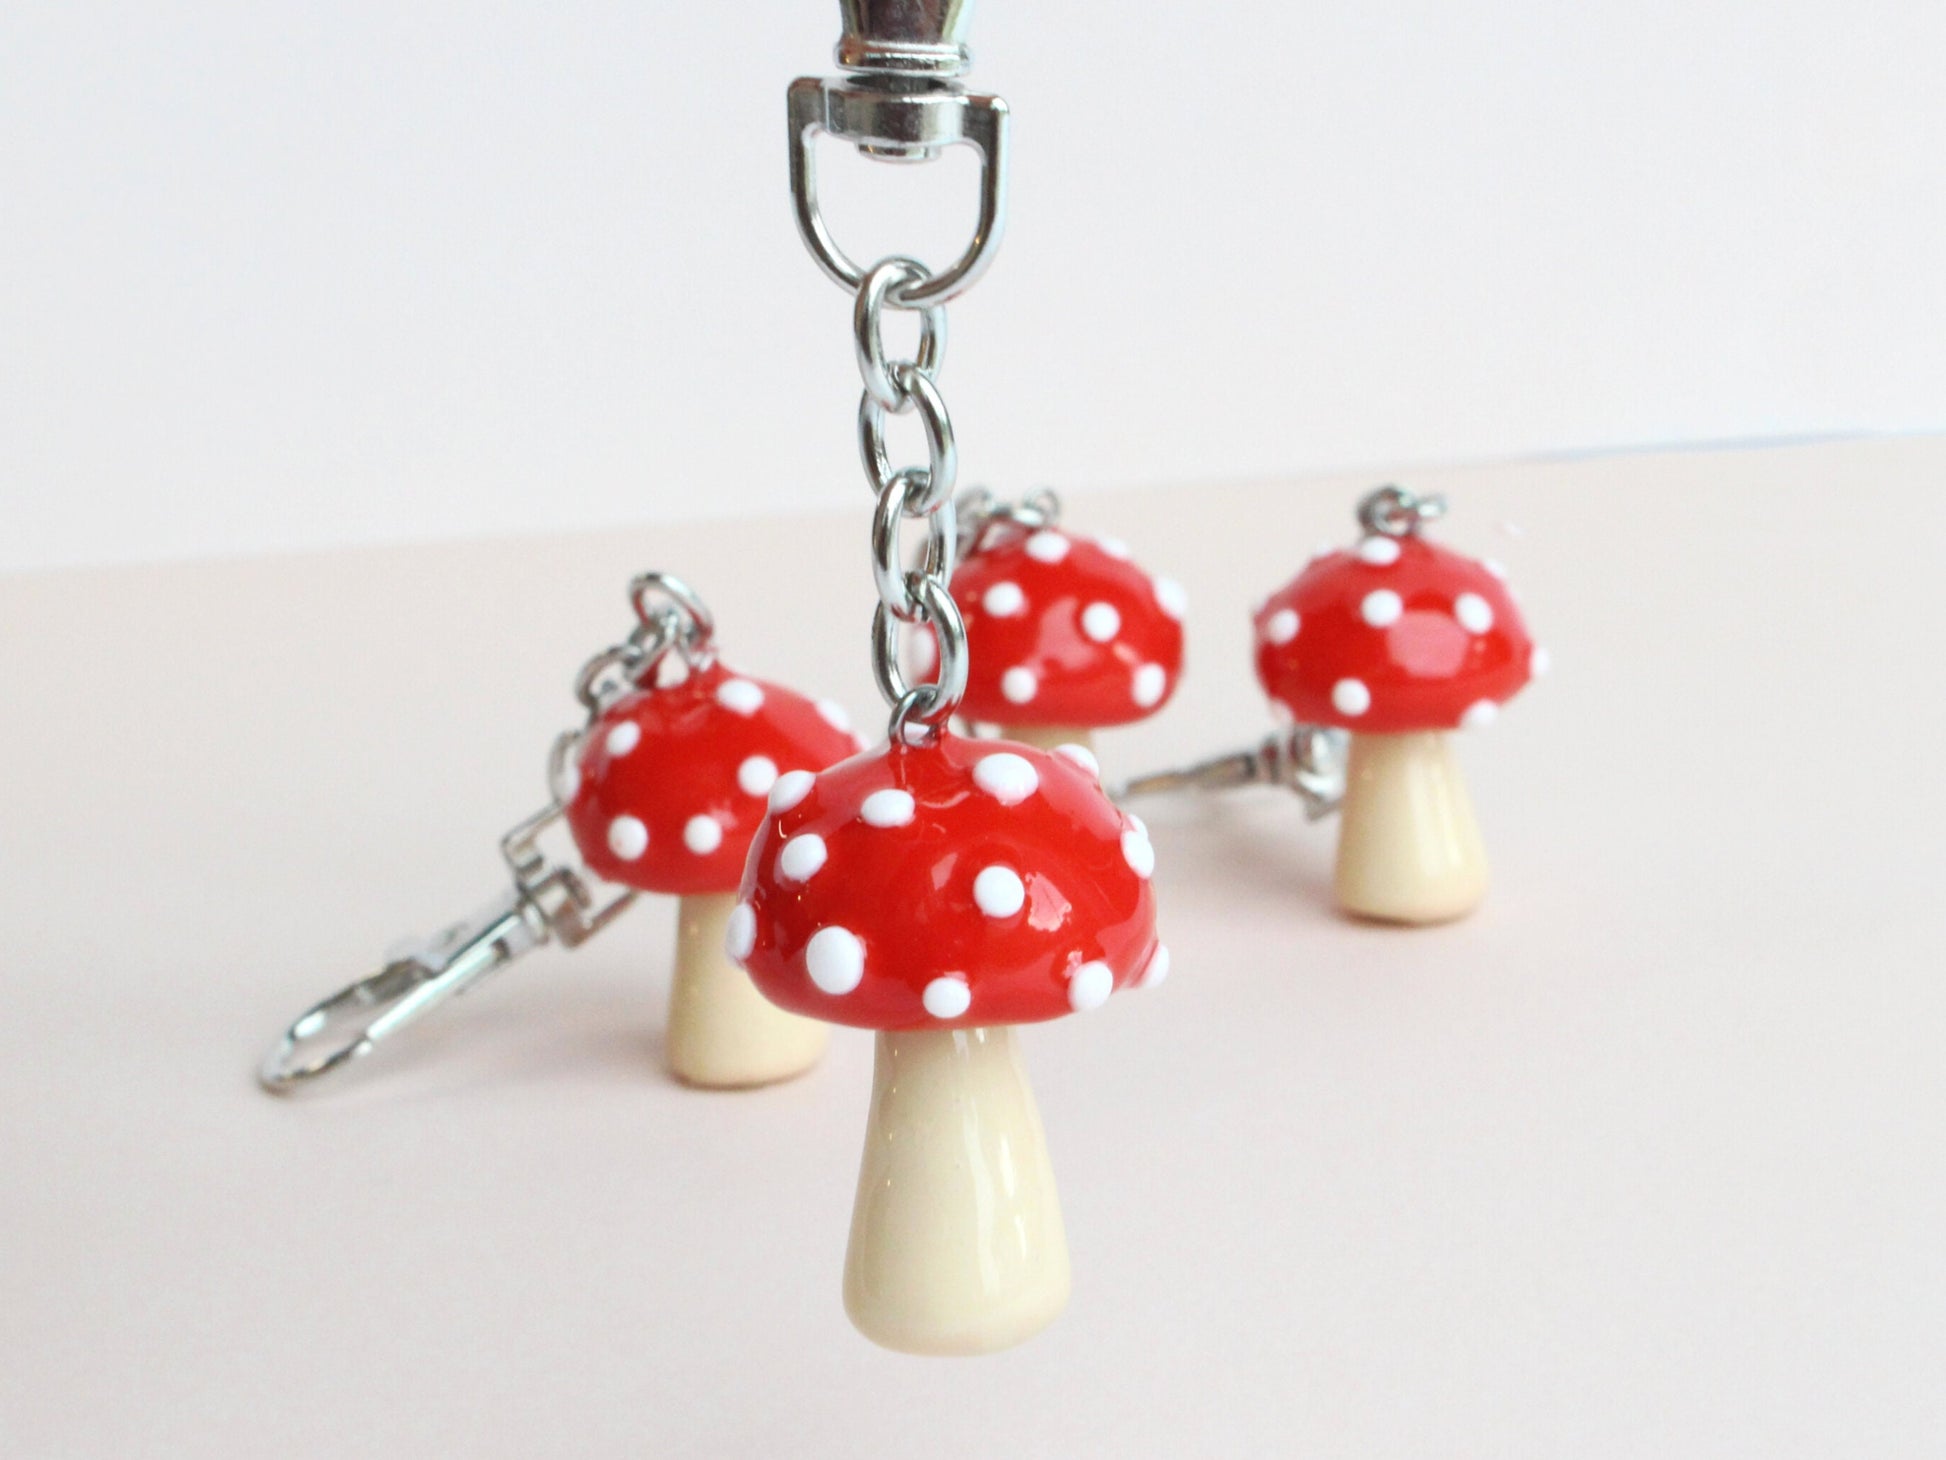 Red Mushroom Keychain